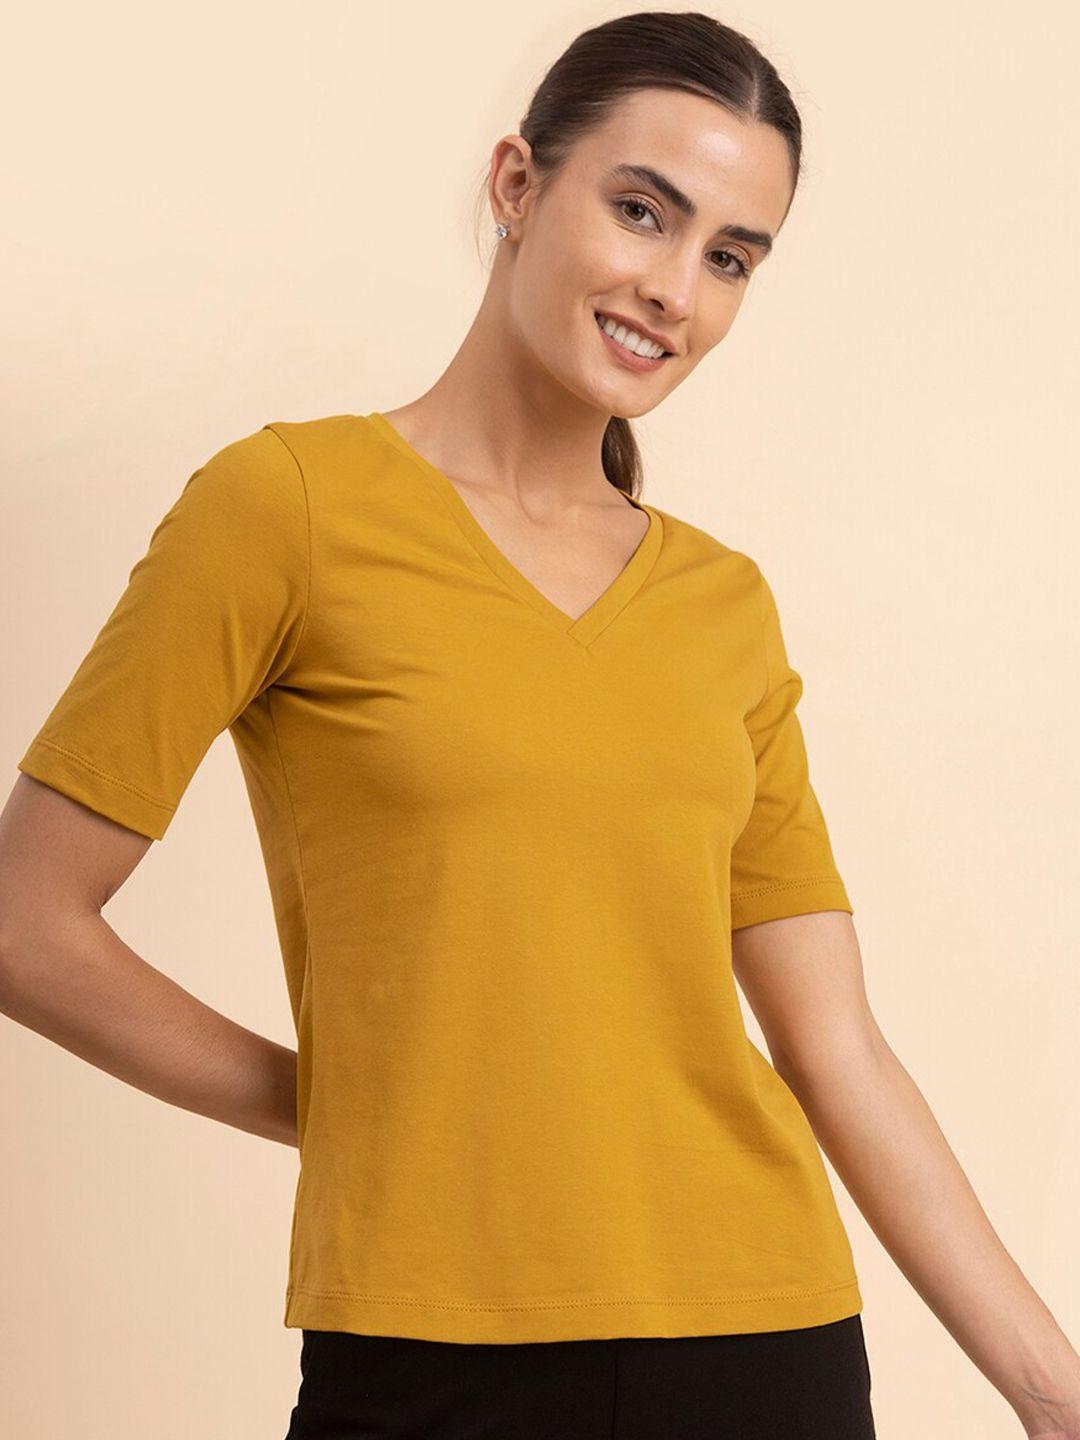 fablestreet v-neck cotton lycra short sleeves t-shirt